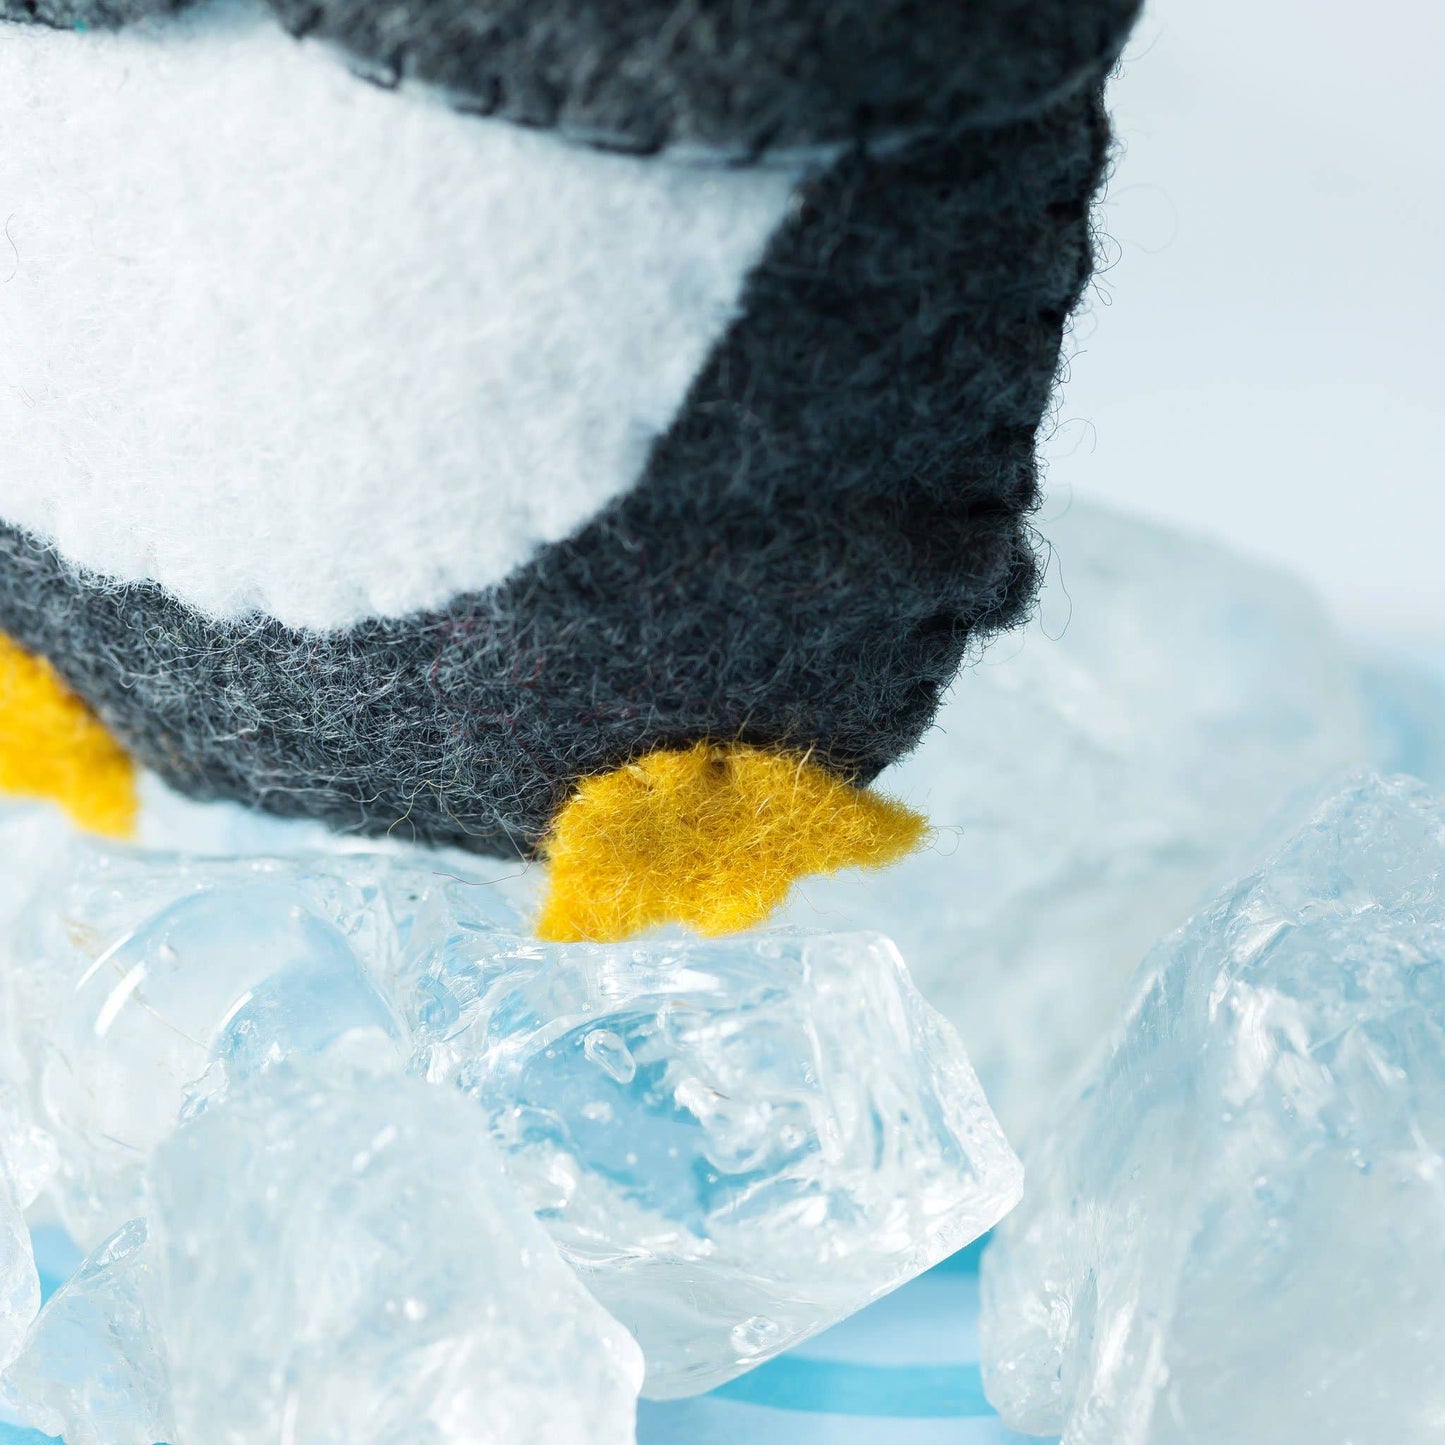 Penguin Felt Craft Mini Kit